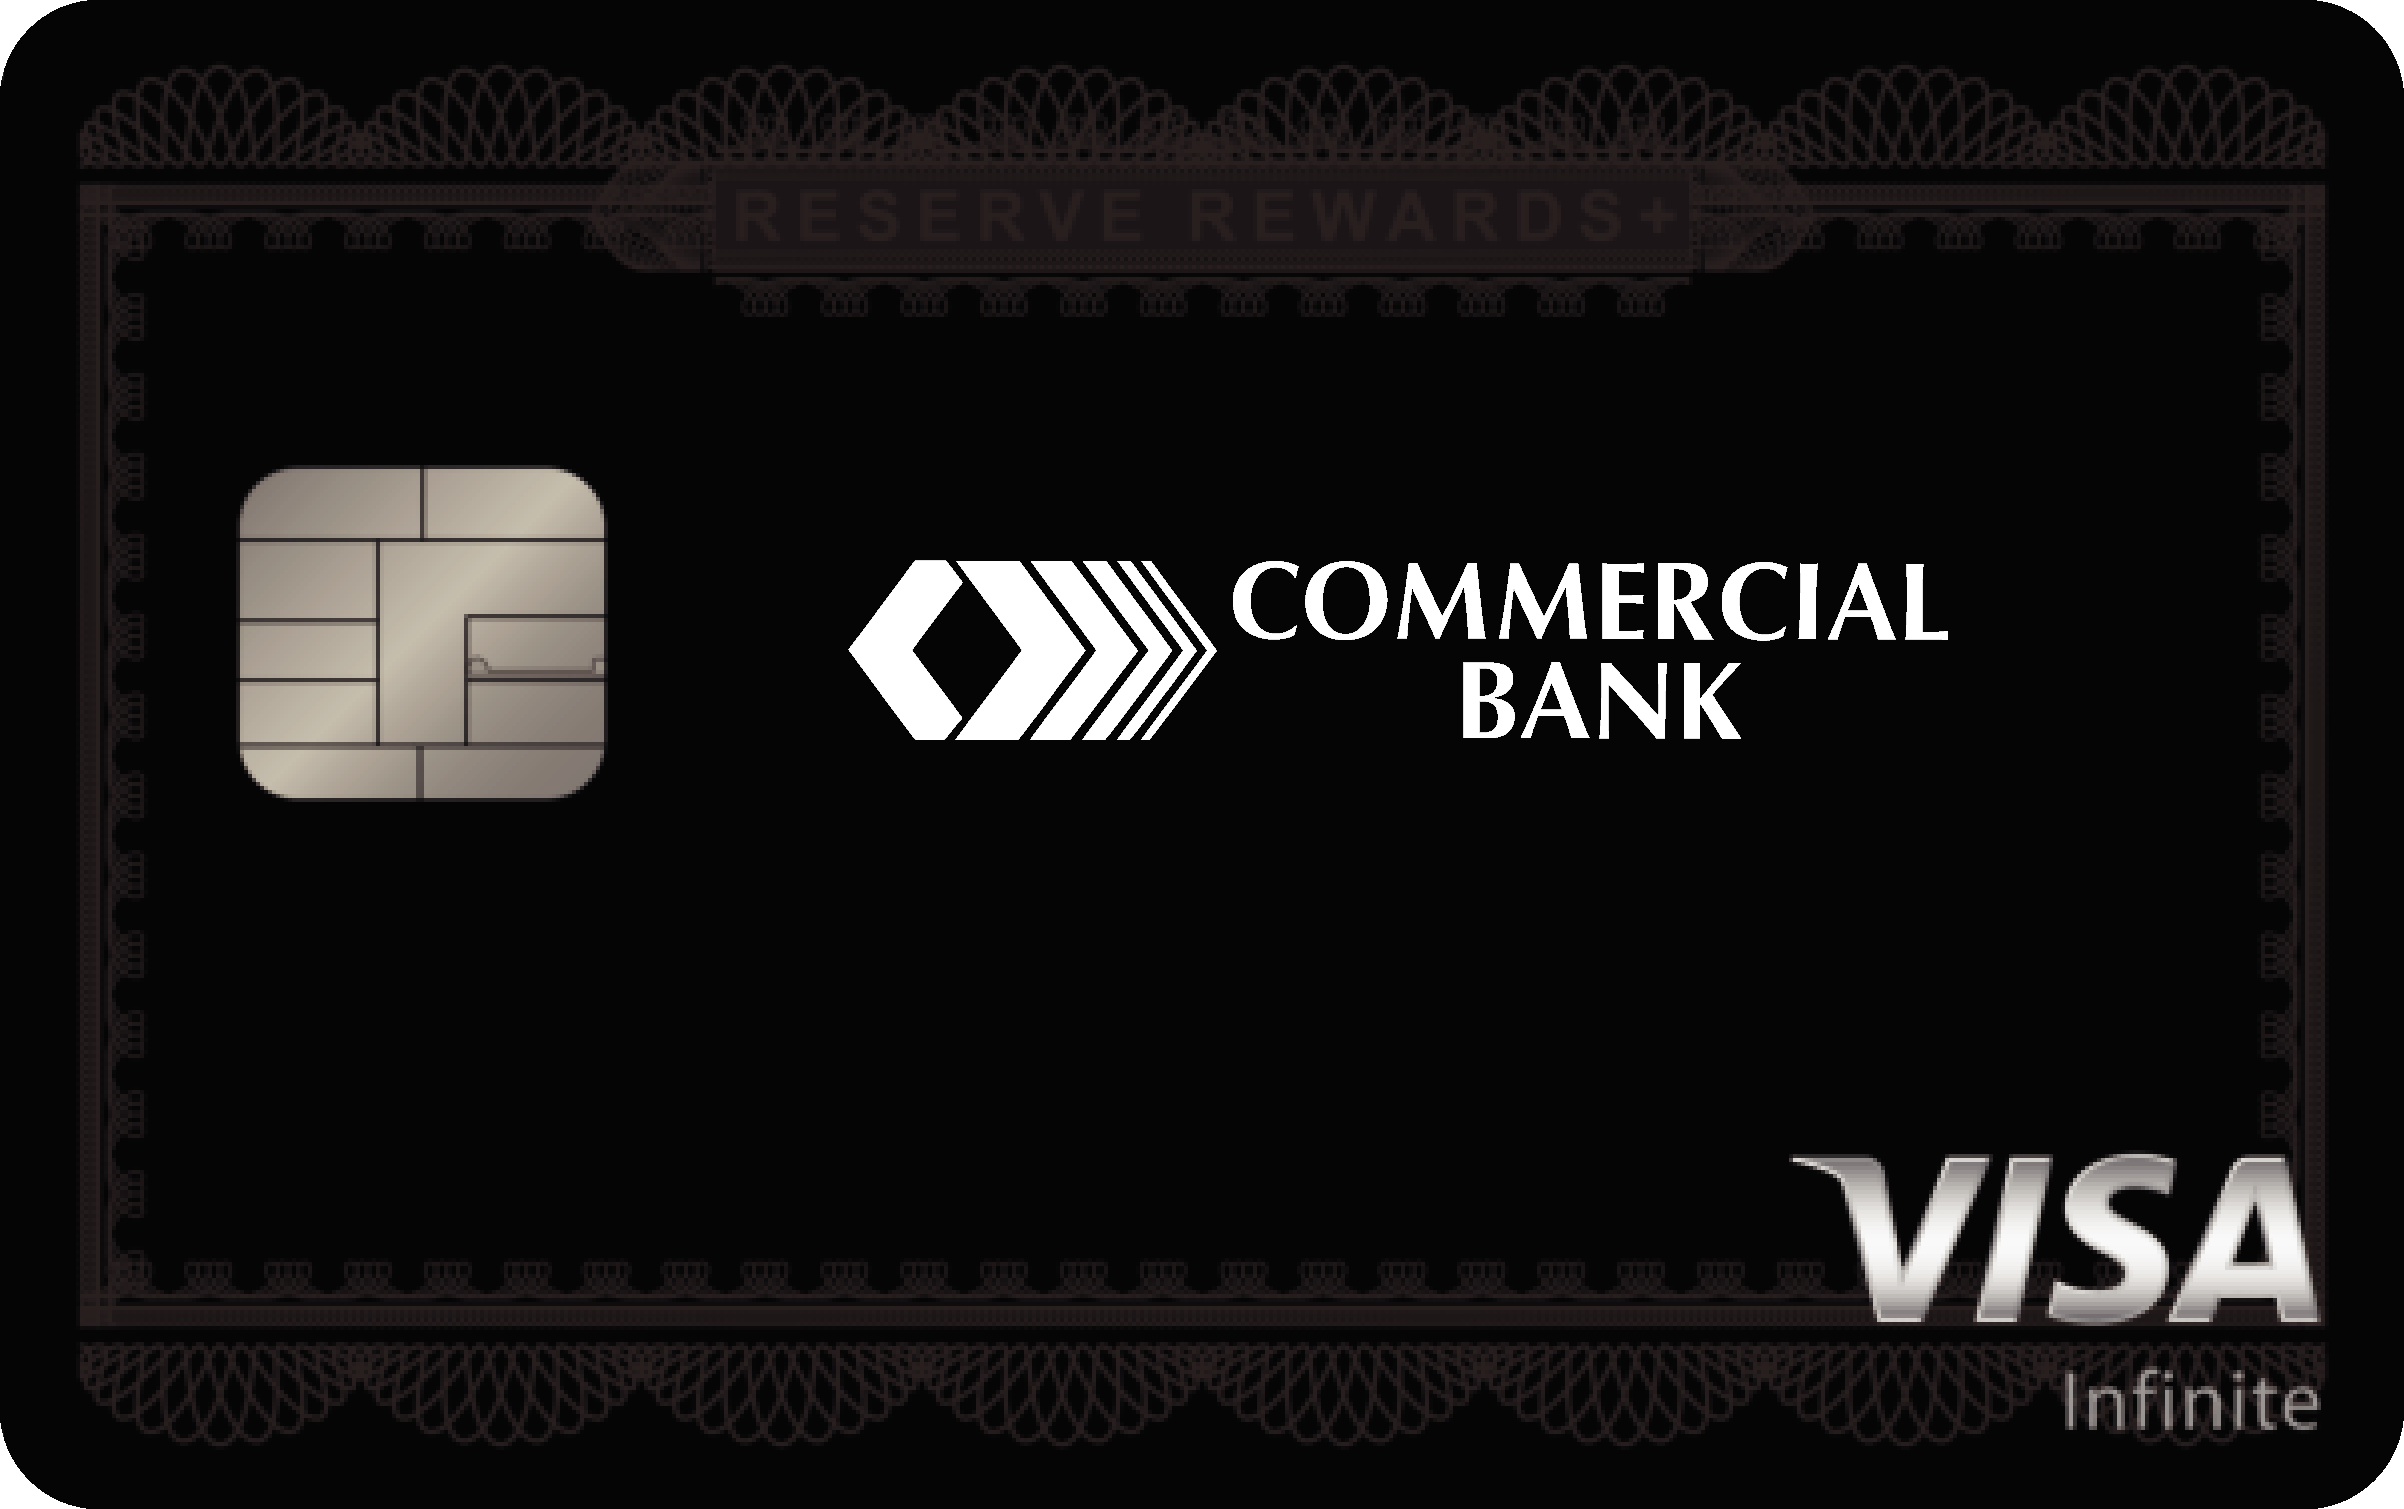 Commercial Bank Reserve Rewards+ Card